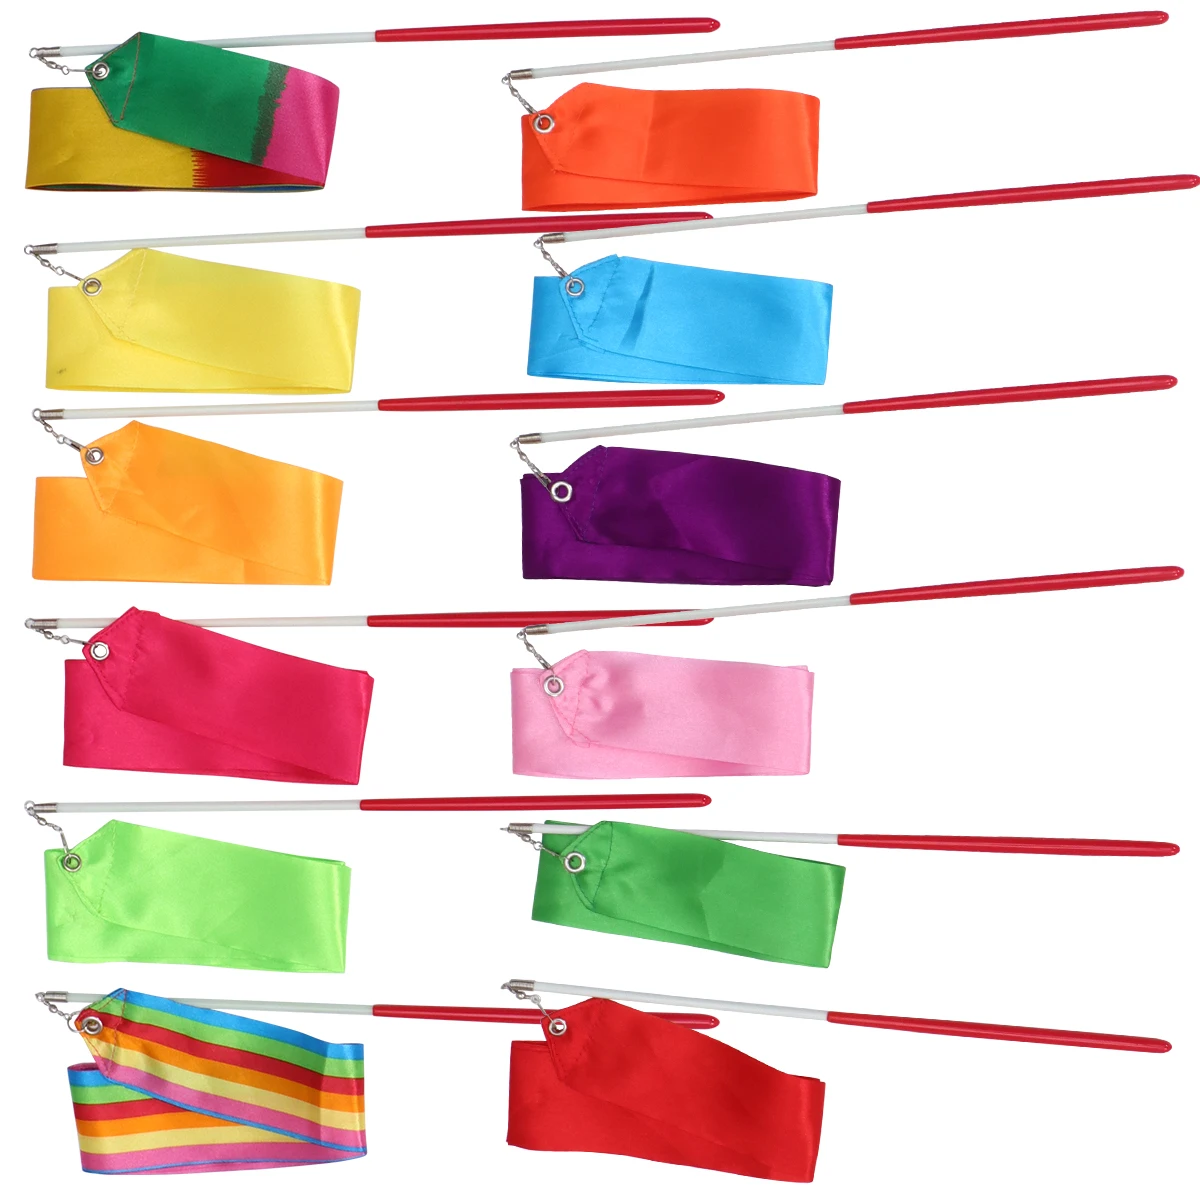 12pcs 2 Meters Rhythmic Colorful Gym Art Gymnastics Ribbon with Stick Children Dancing Streamers Riband Rod for Gymnastics